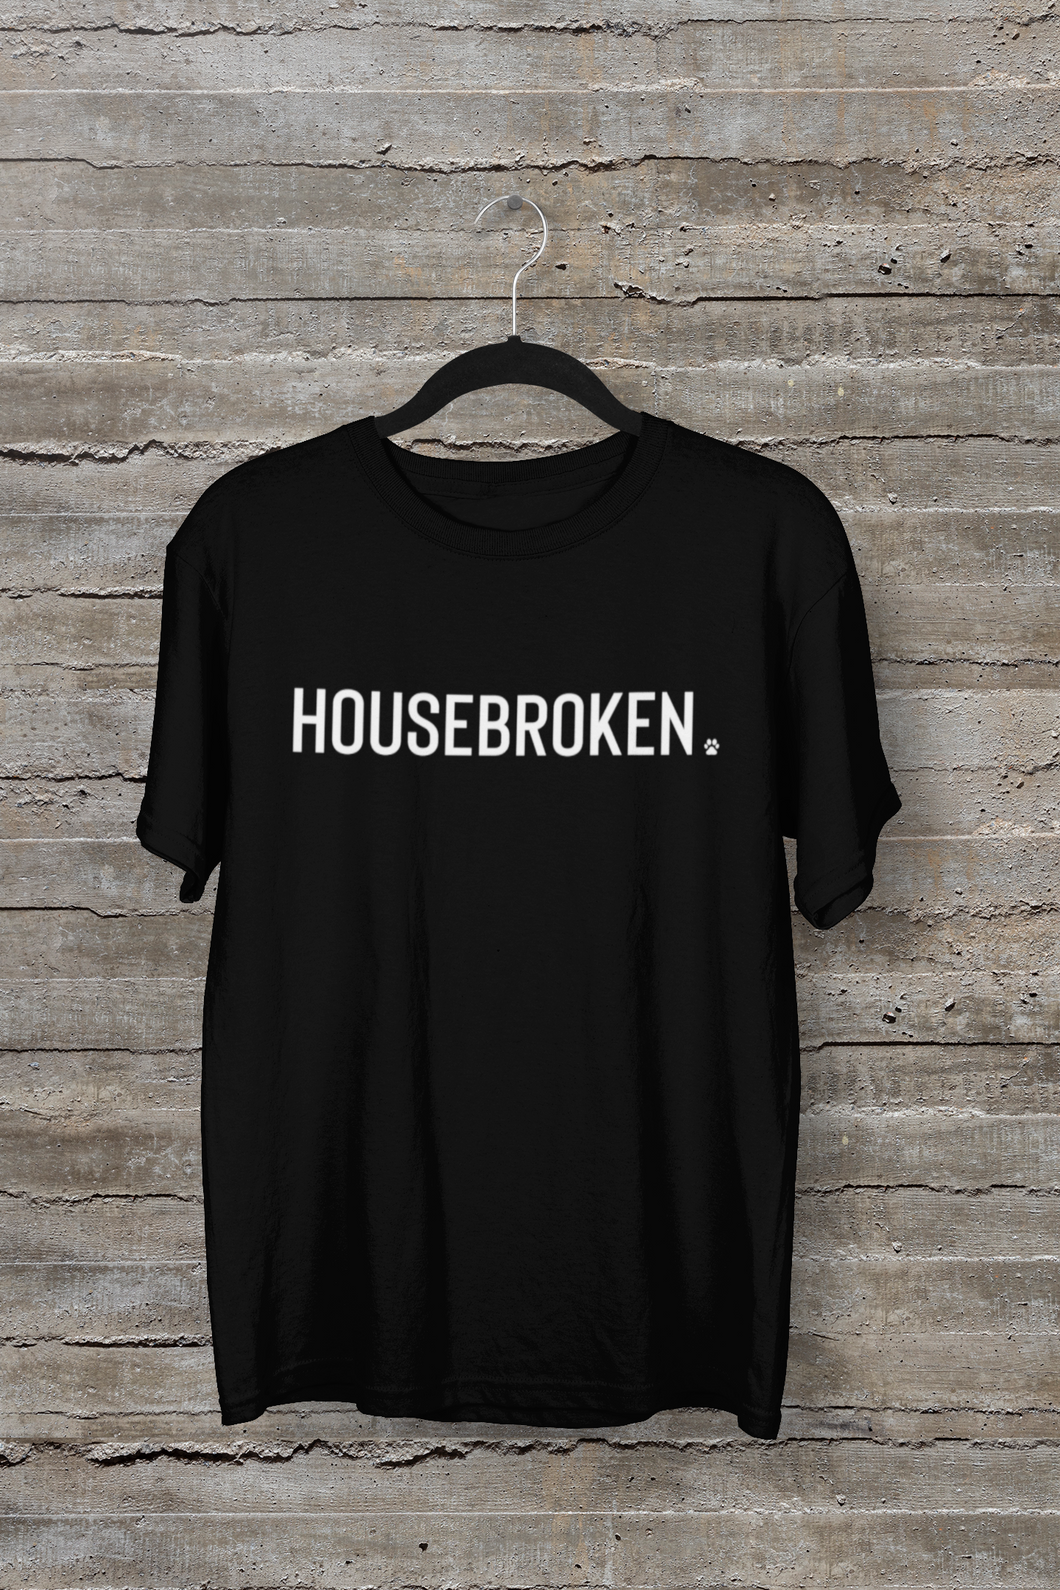 Housebroken Men's/Unisex or Women's T-shirt